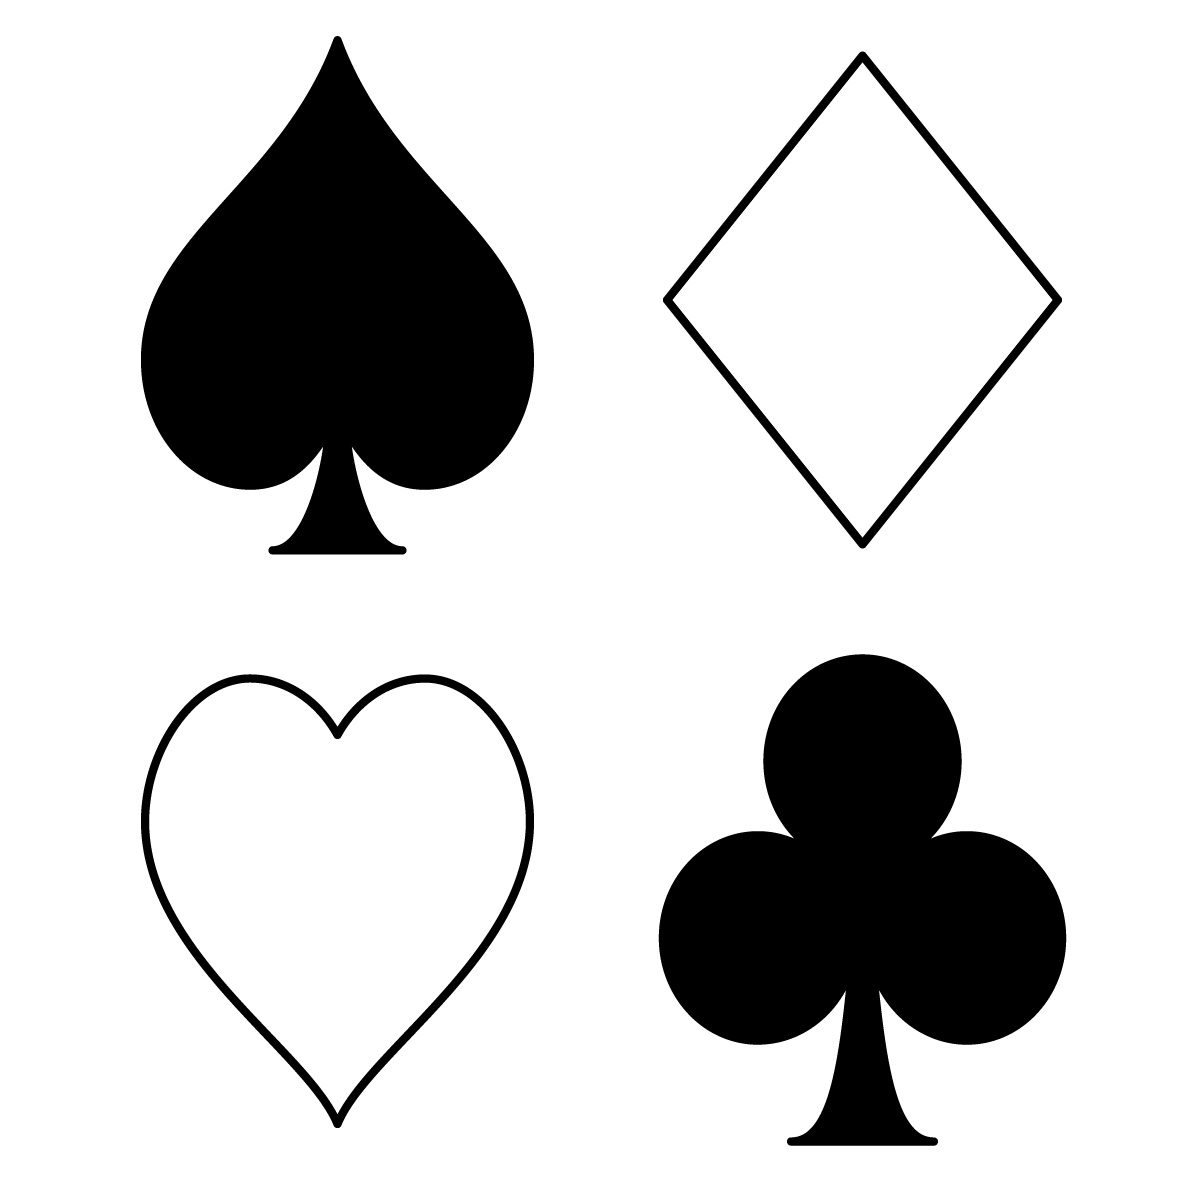 ace-cards-clipart-best